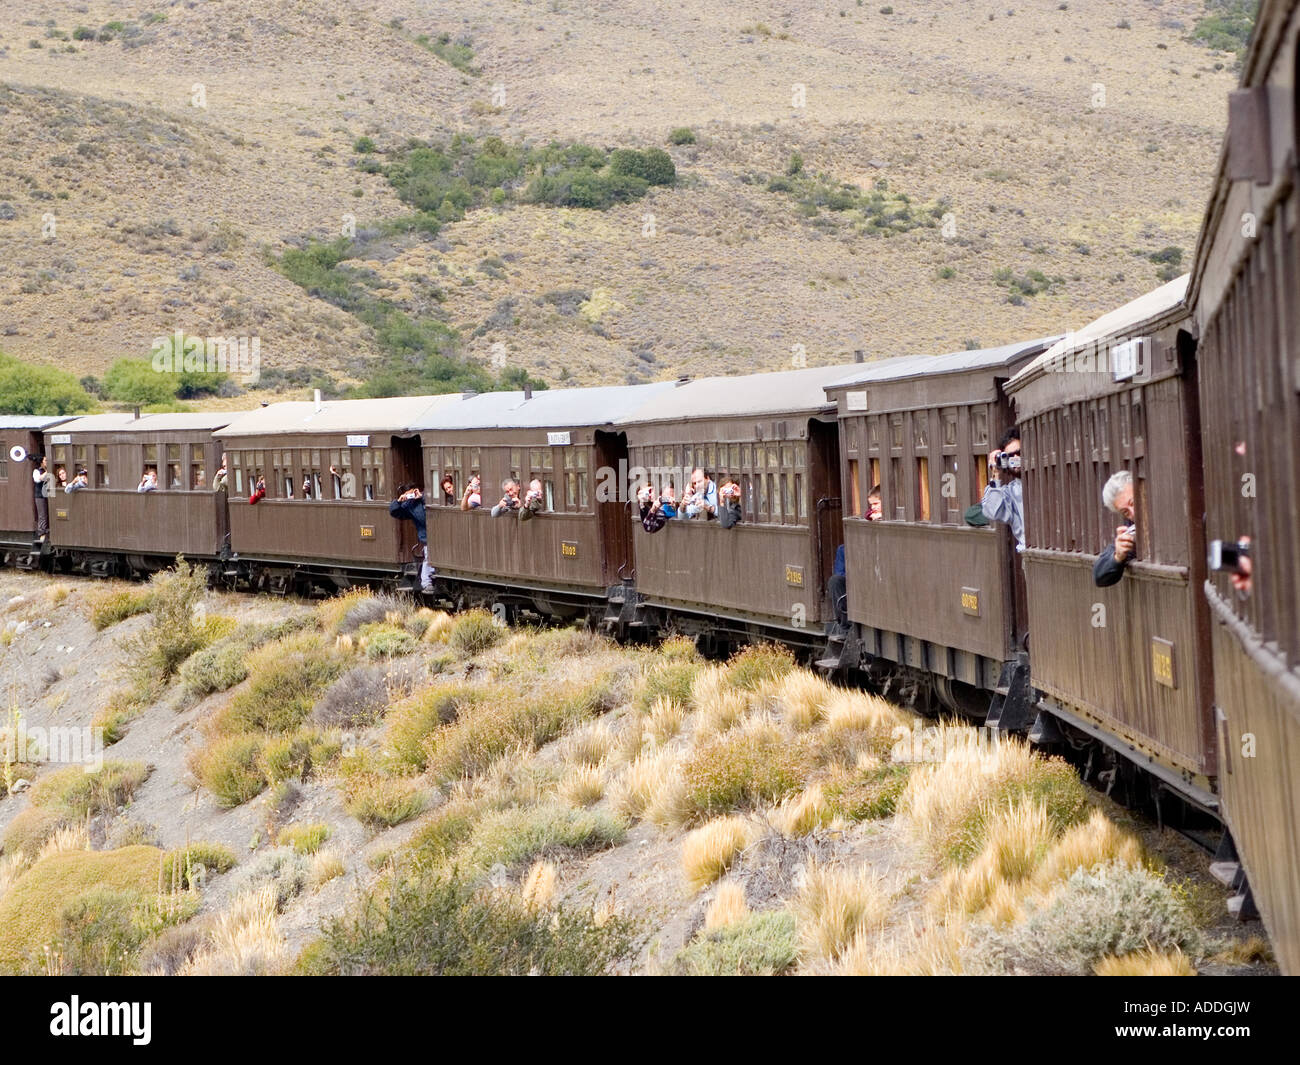 'La Trochita', a vapor train that is a typical tourist attraction at Esquel, Patagonia Argentina. Stock Photo